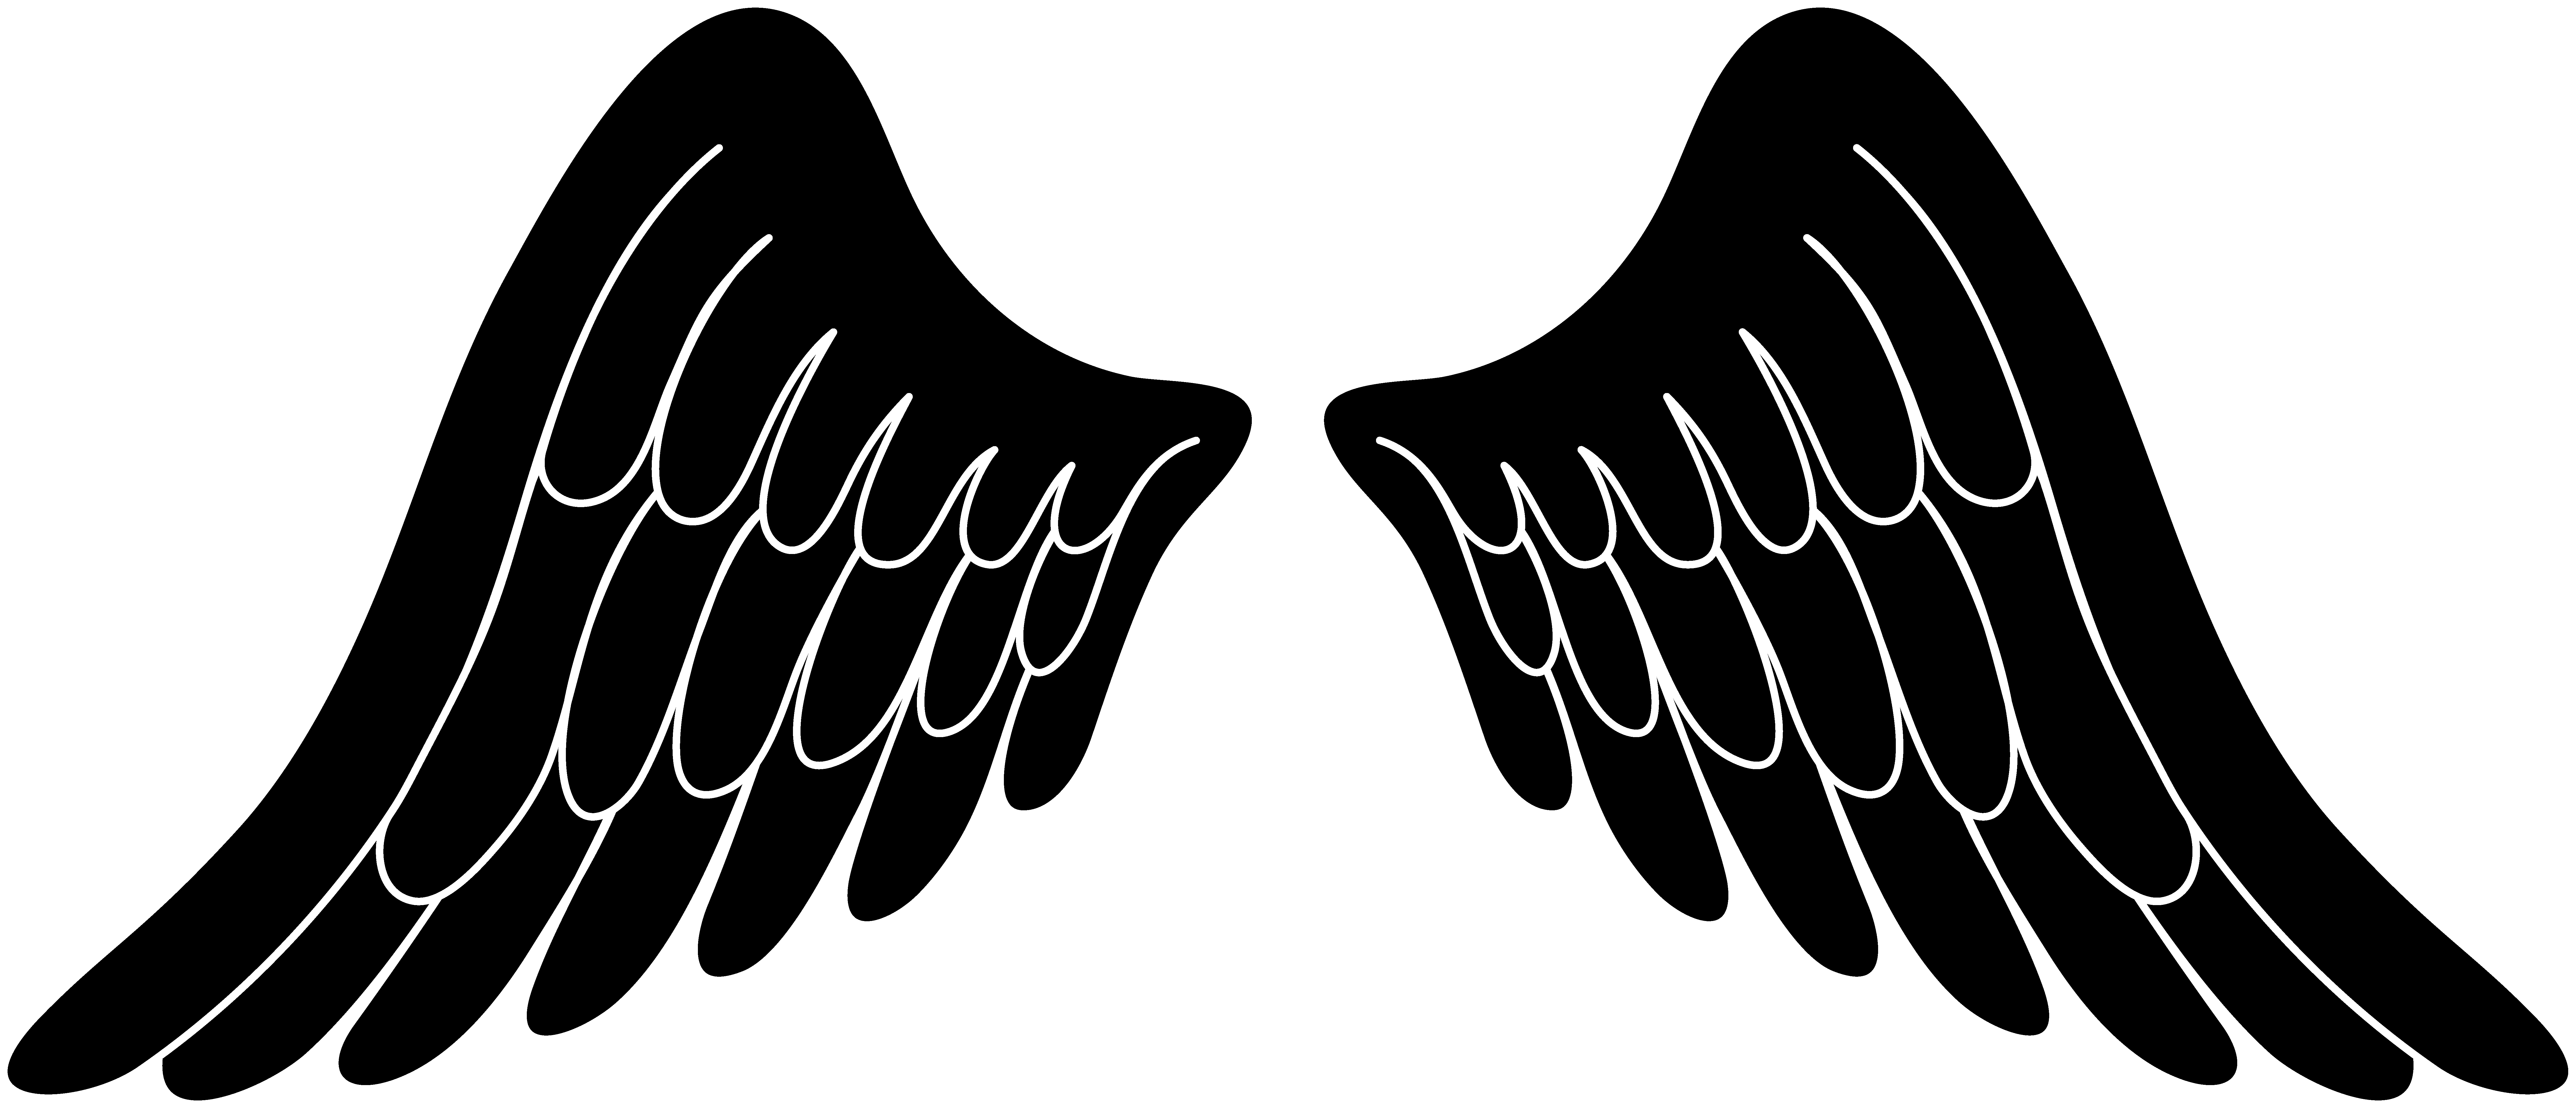 Angel wings Stock Illustratio